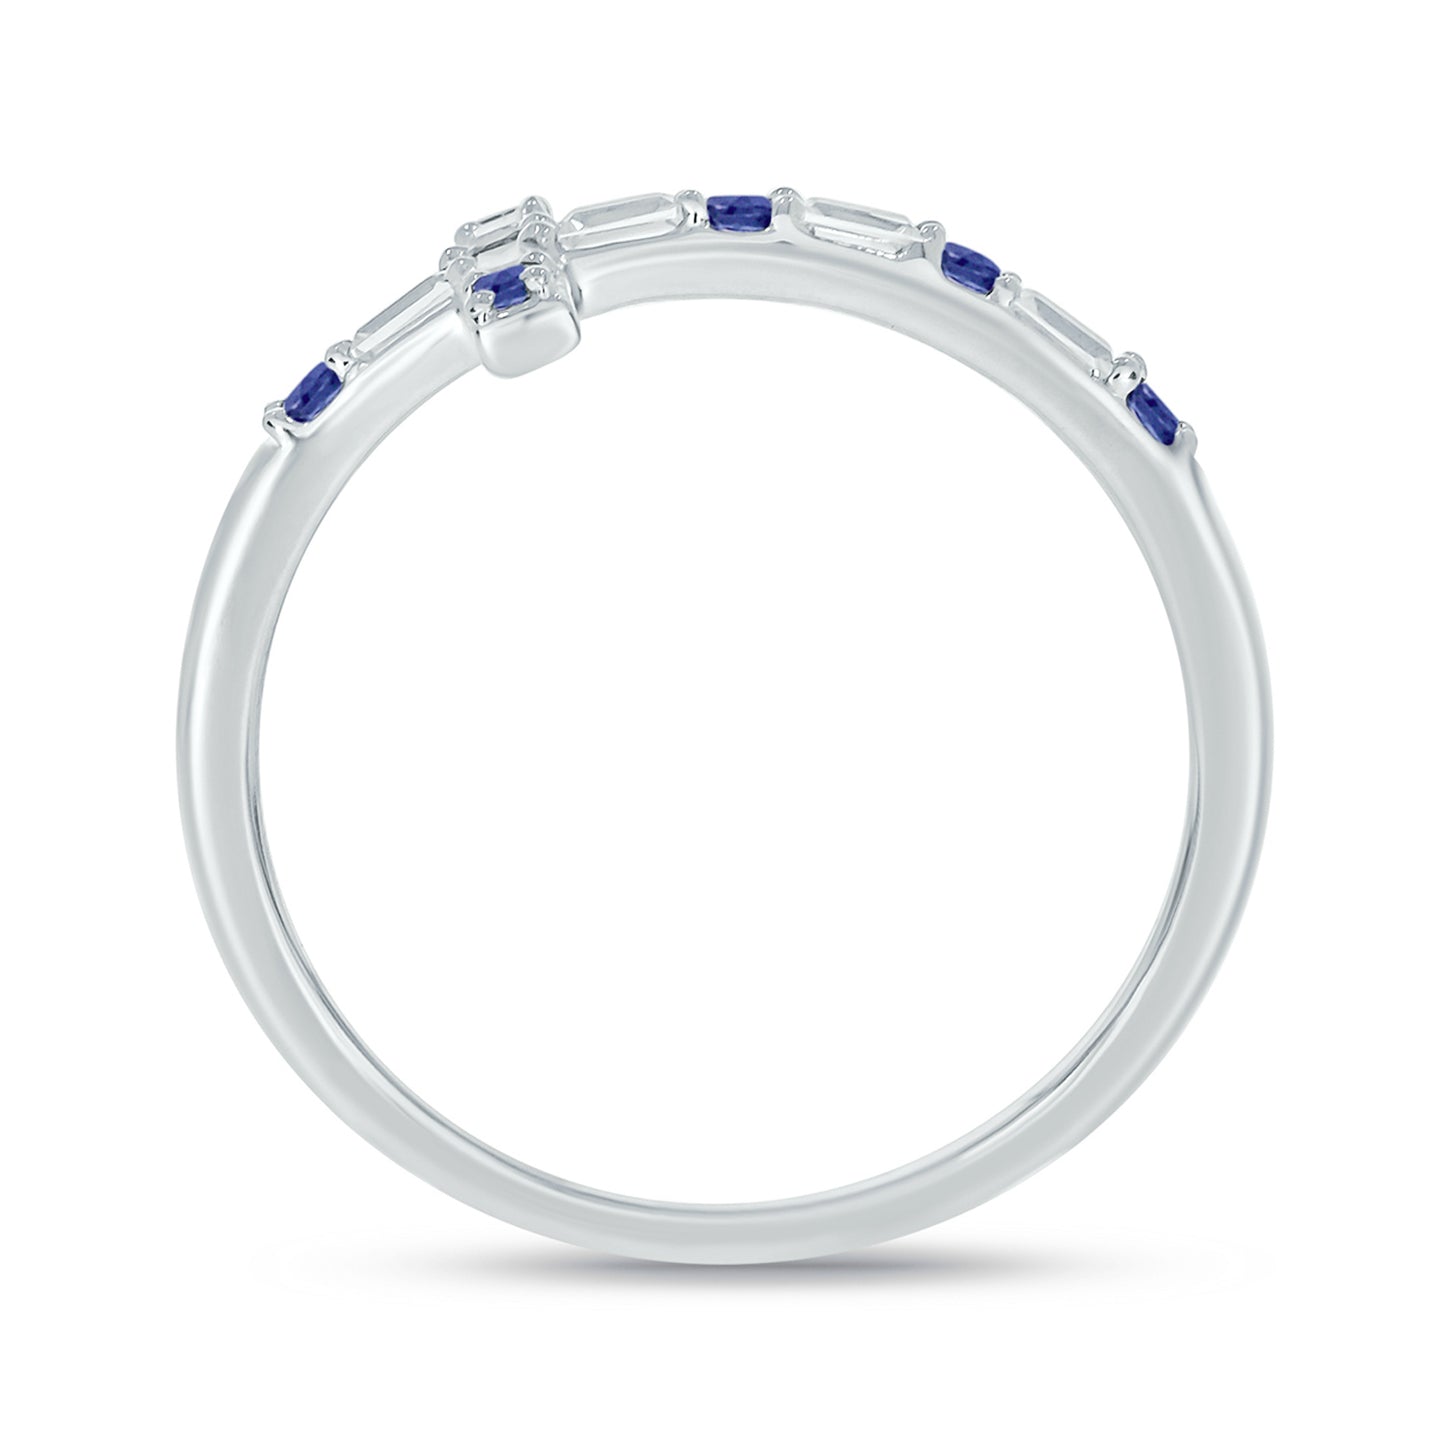 Diamond & Gemstone Cross Ring in 14K Gold - Blue Sapphire, Natural Diamonds